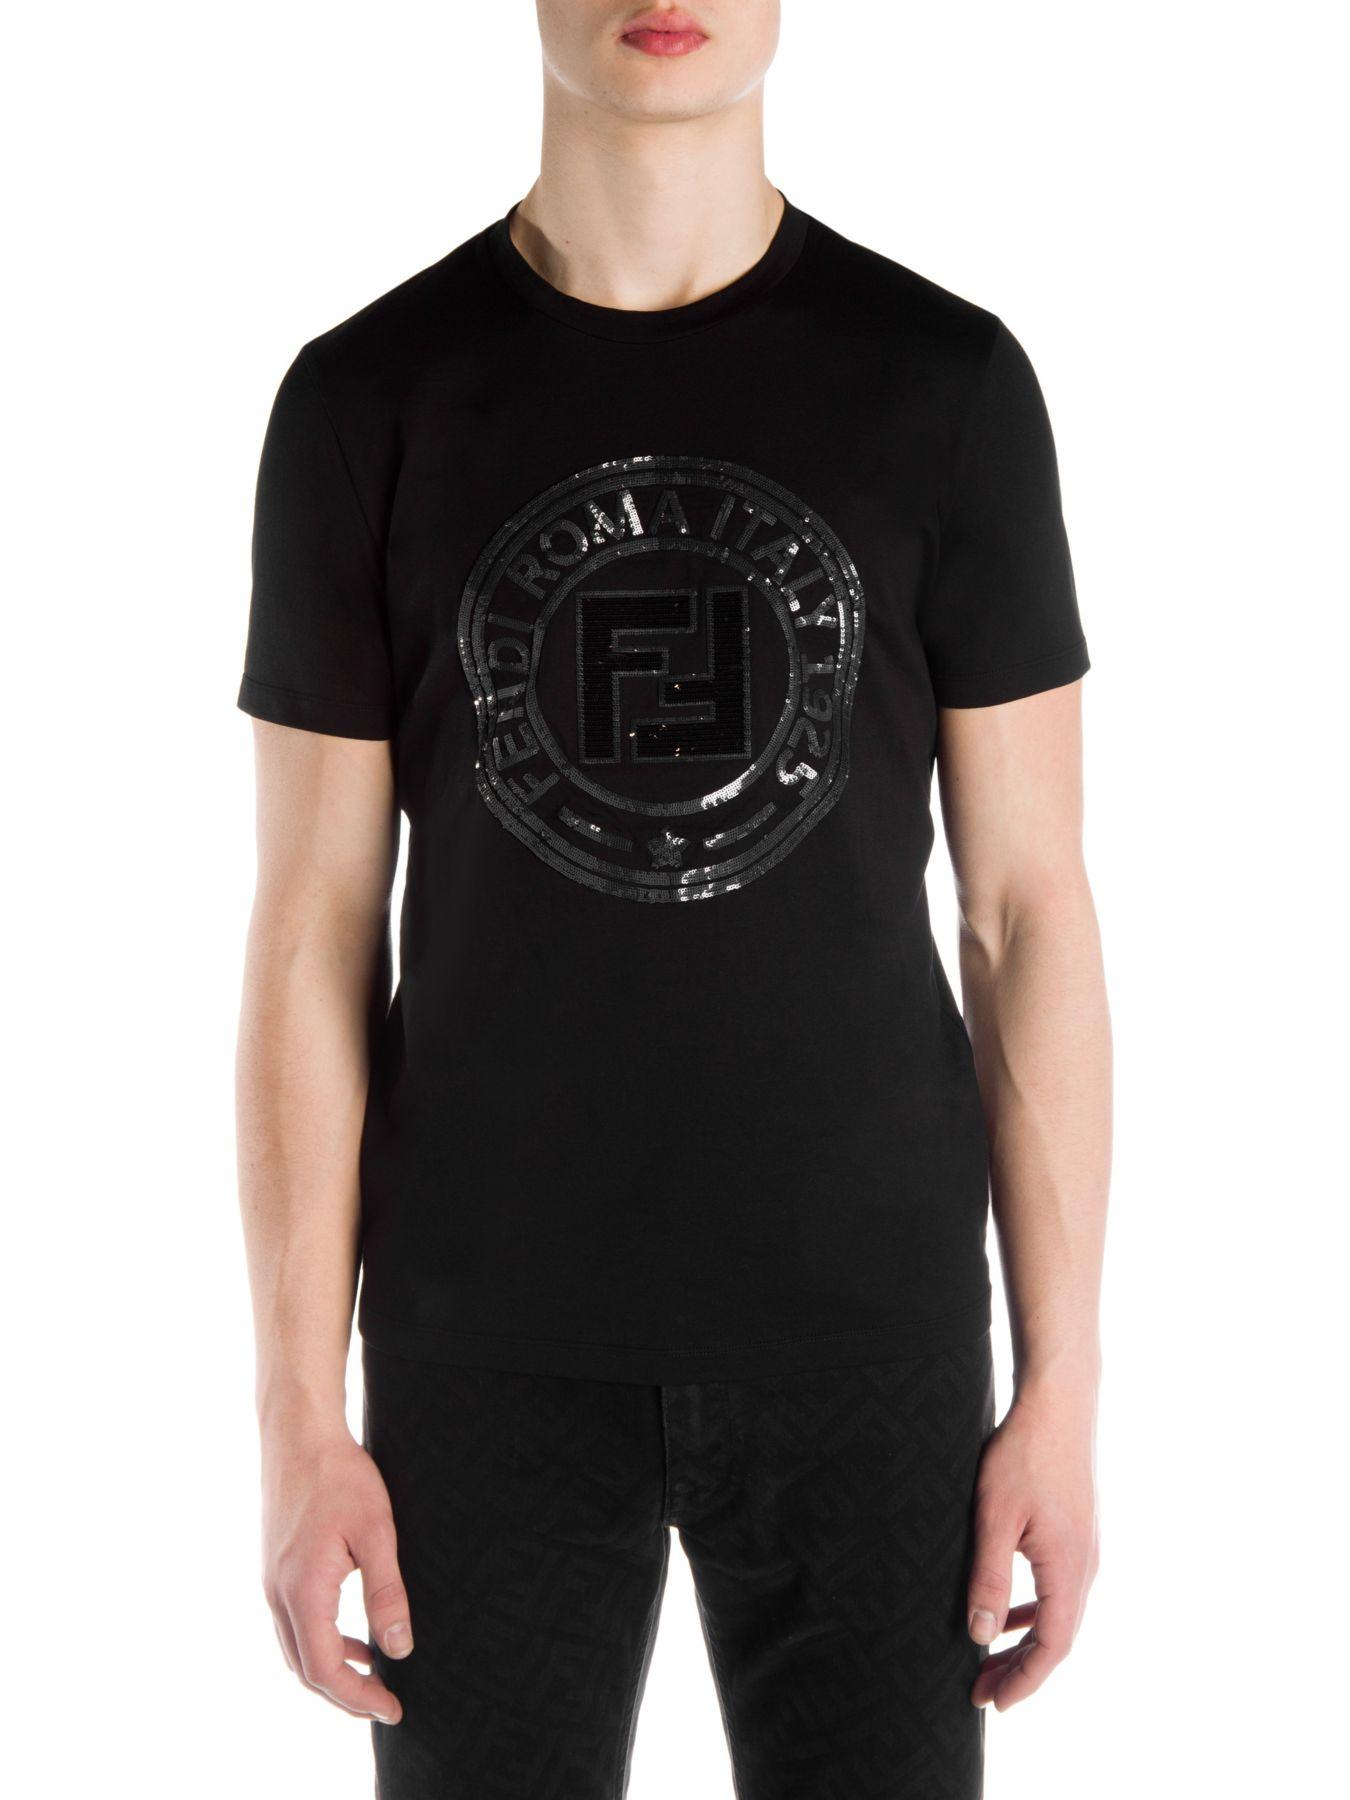 Fendi Cotton Circle Logo T-shirt in Black for Men - Lyst